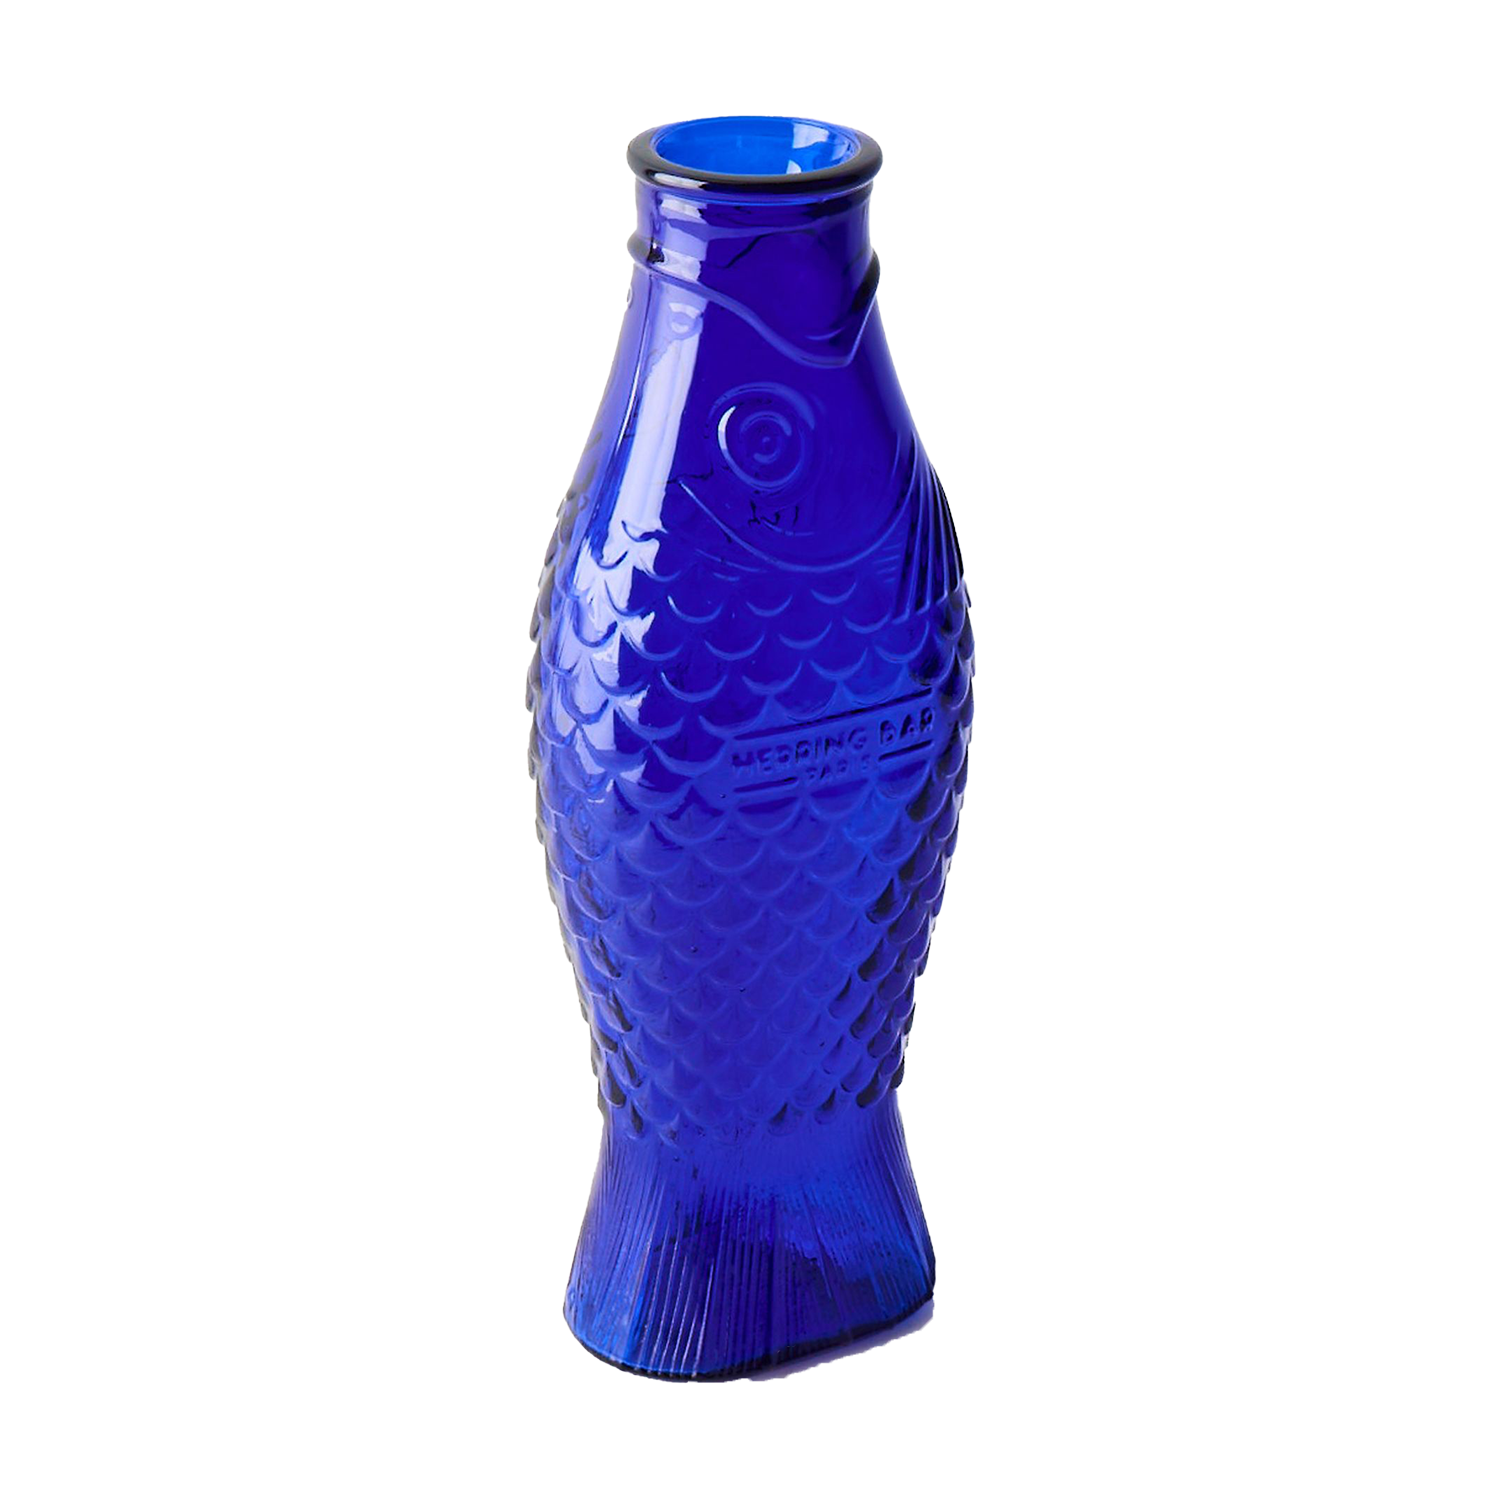 Serax blue fish glass carafe